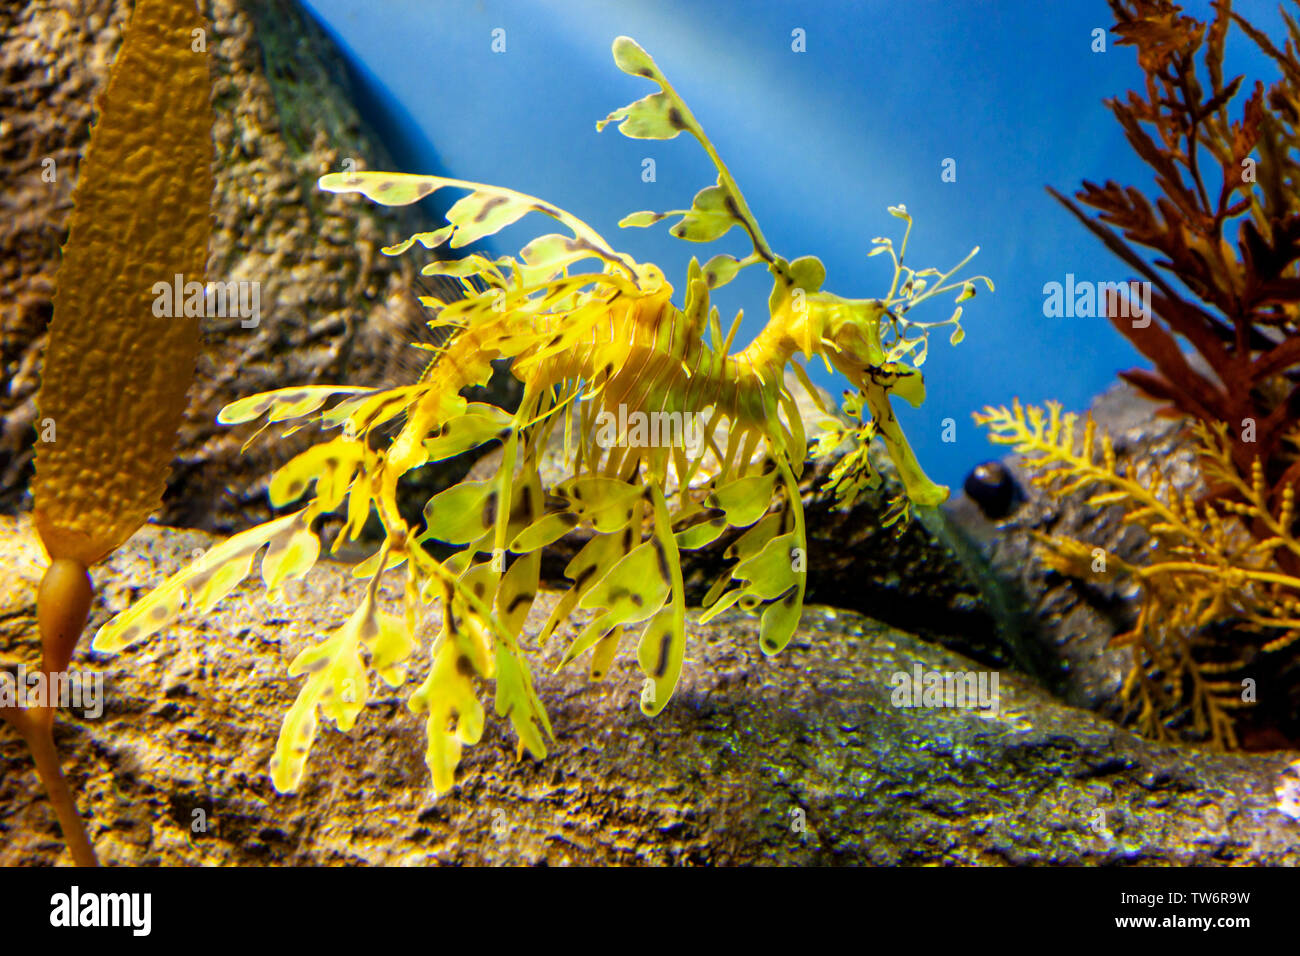 very delicate seahorse that looks like seaweed Stock Photo